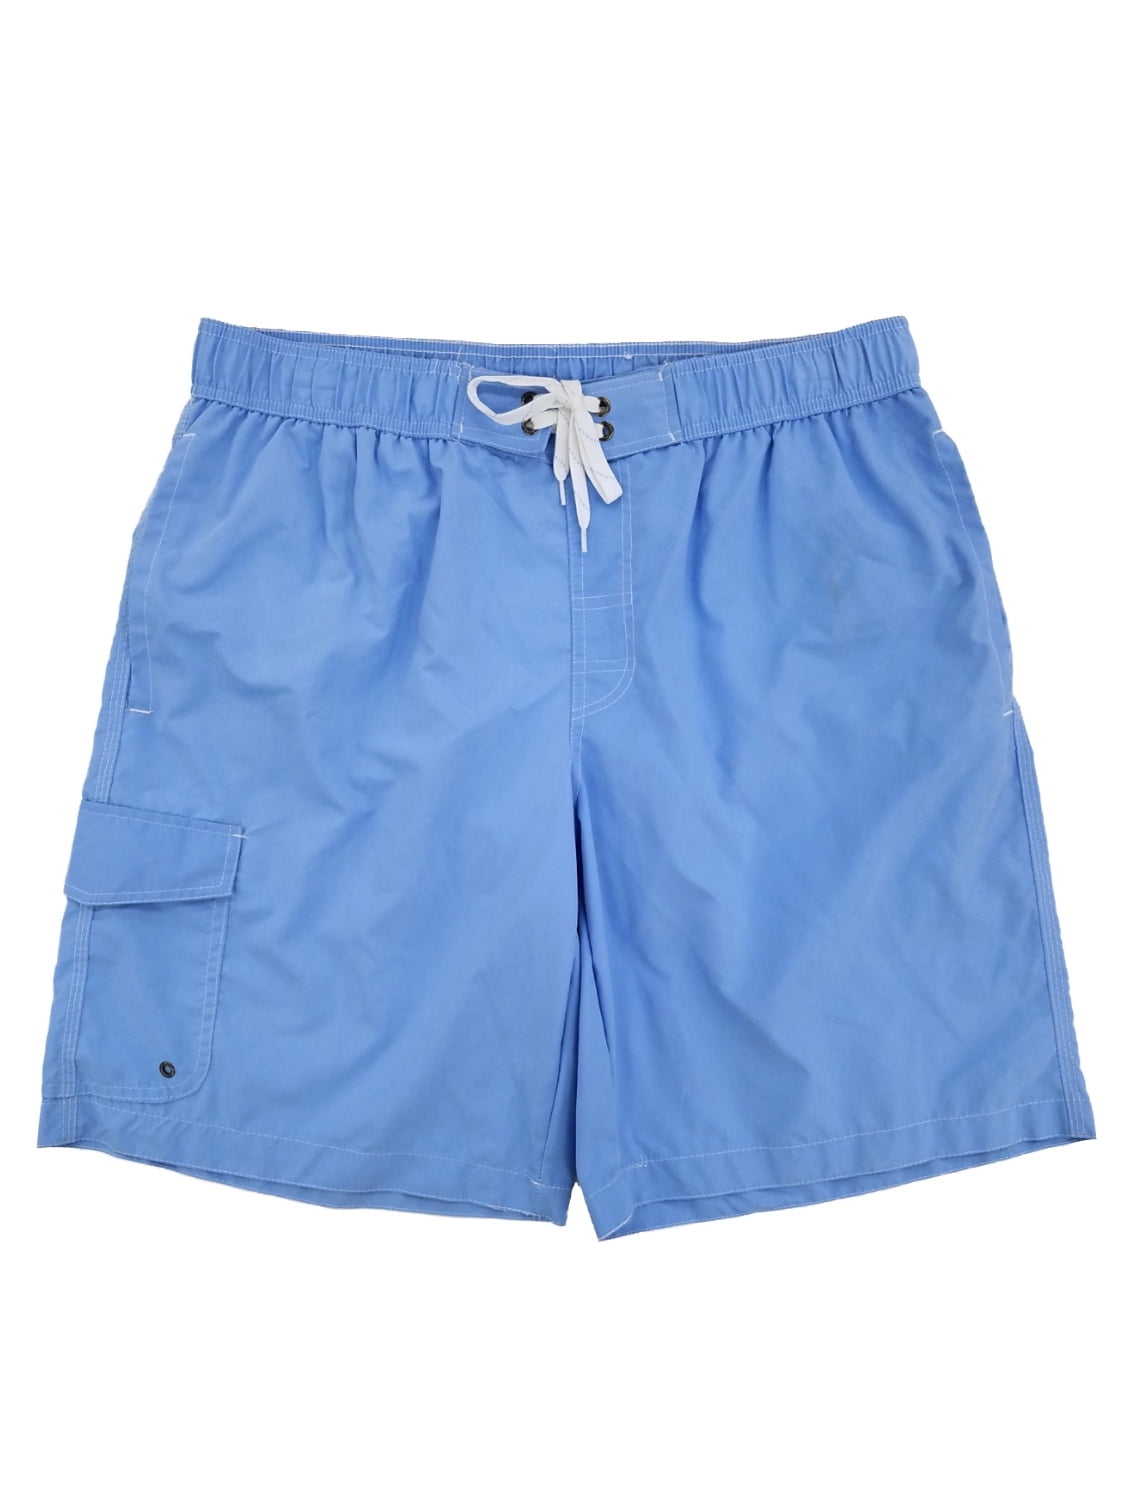 RYHT Blue Mens Summer Beach Quick-Dry Surf Swim Trunks Boardshorts Cargo Pants